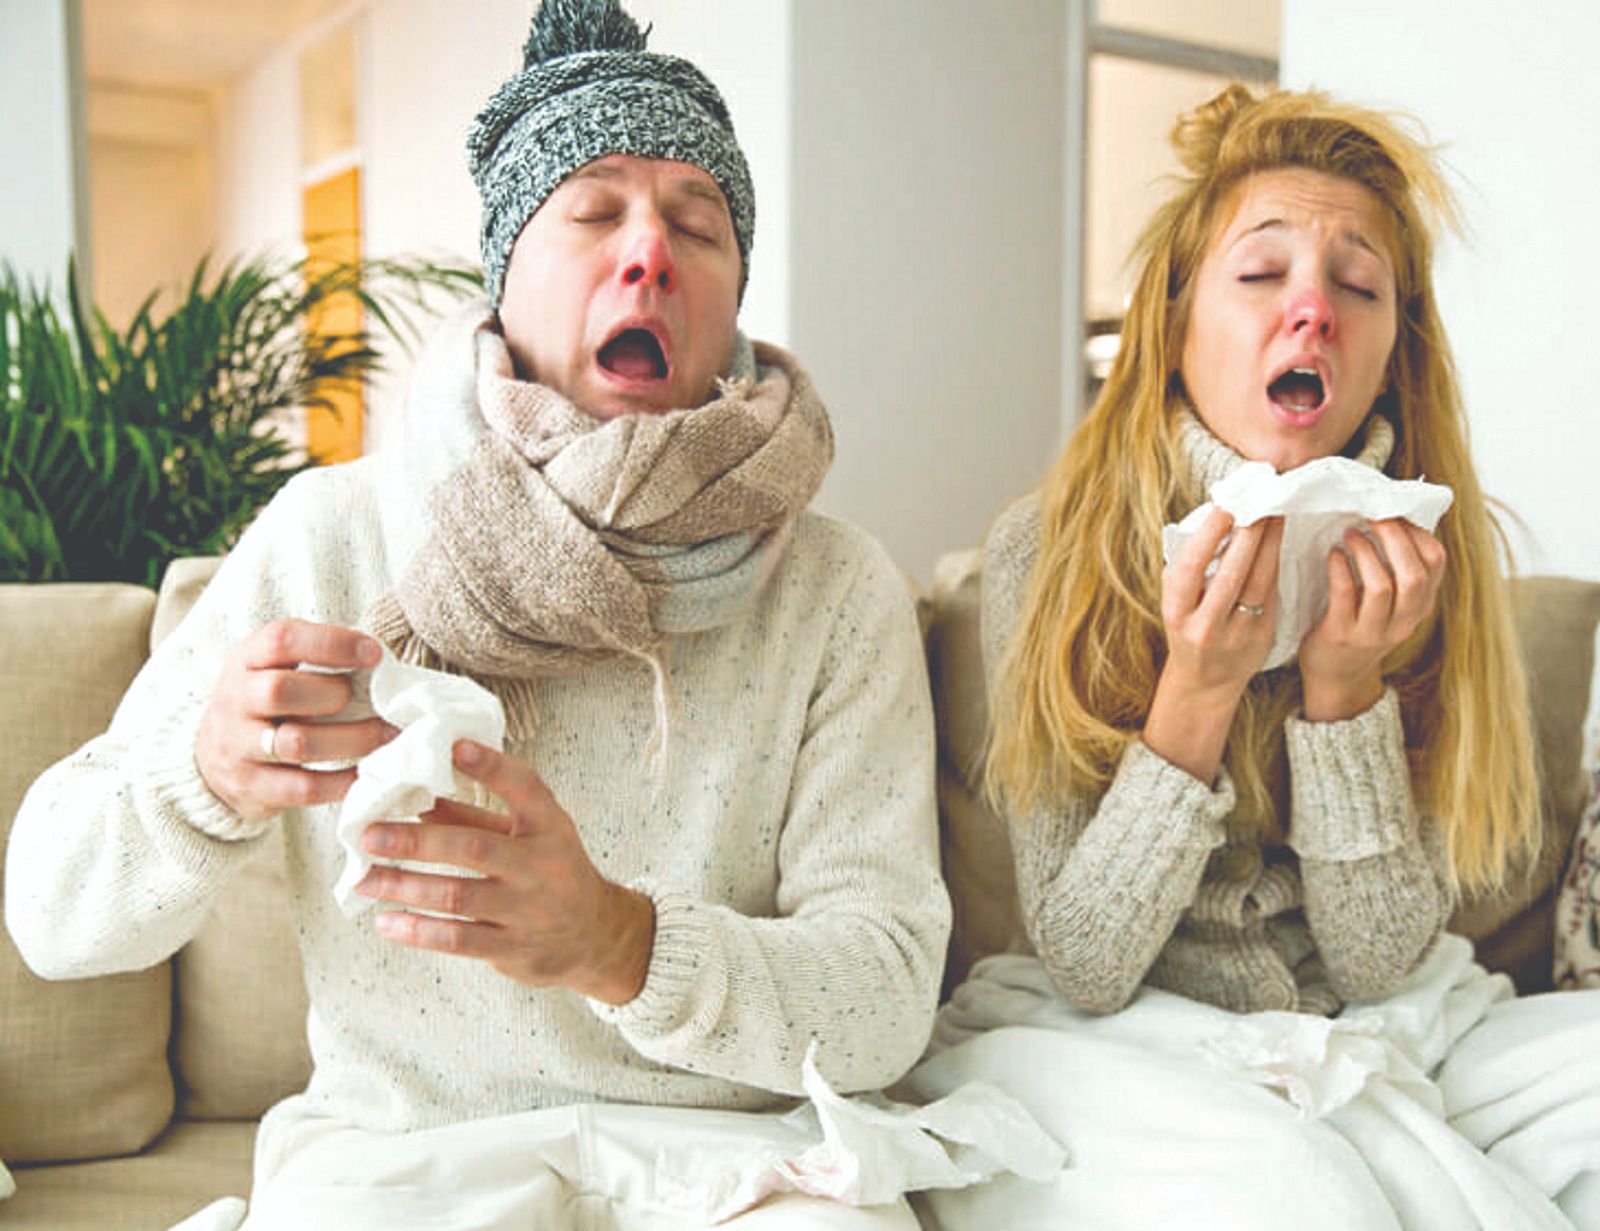 prehlada gripa viroza zimske bolesti